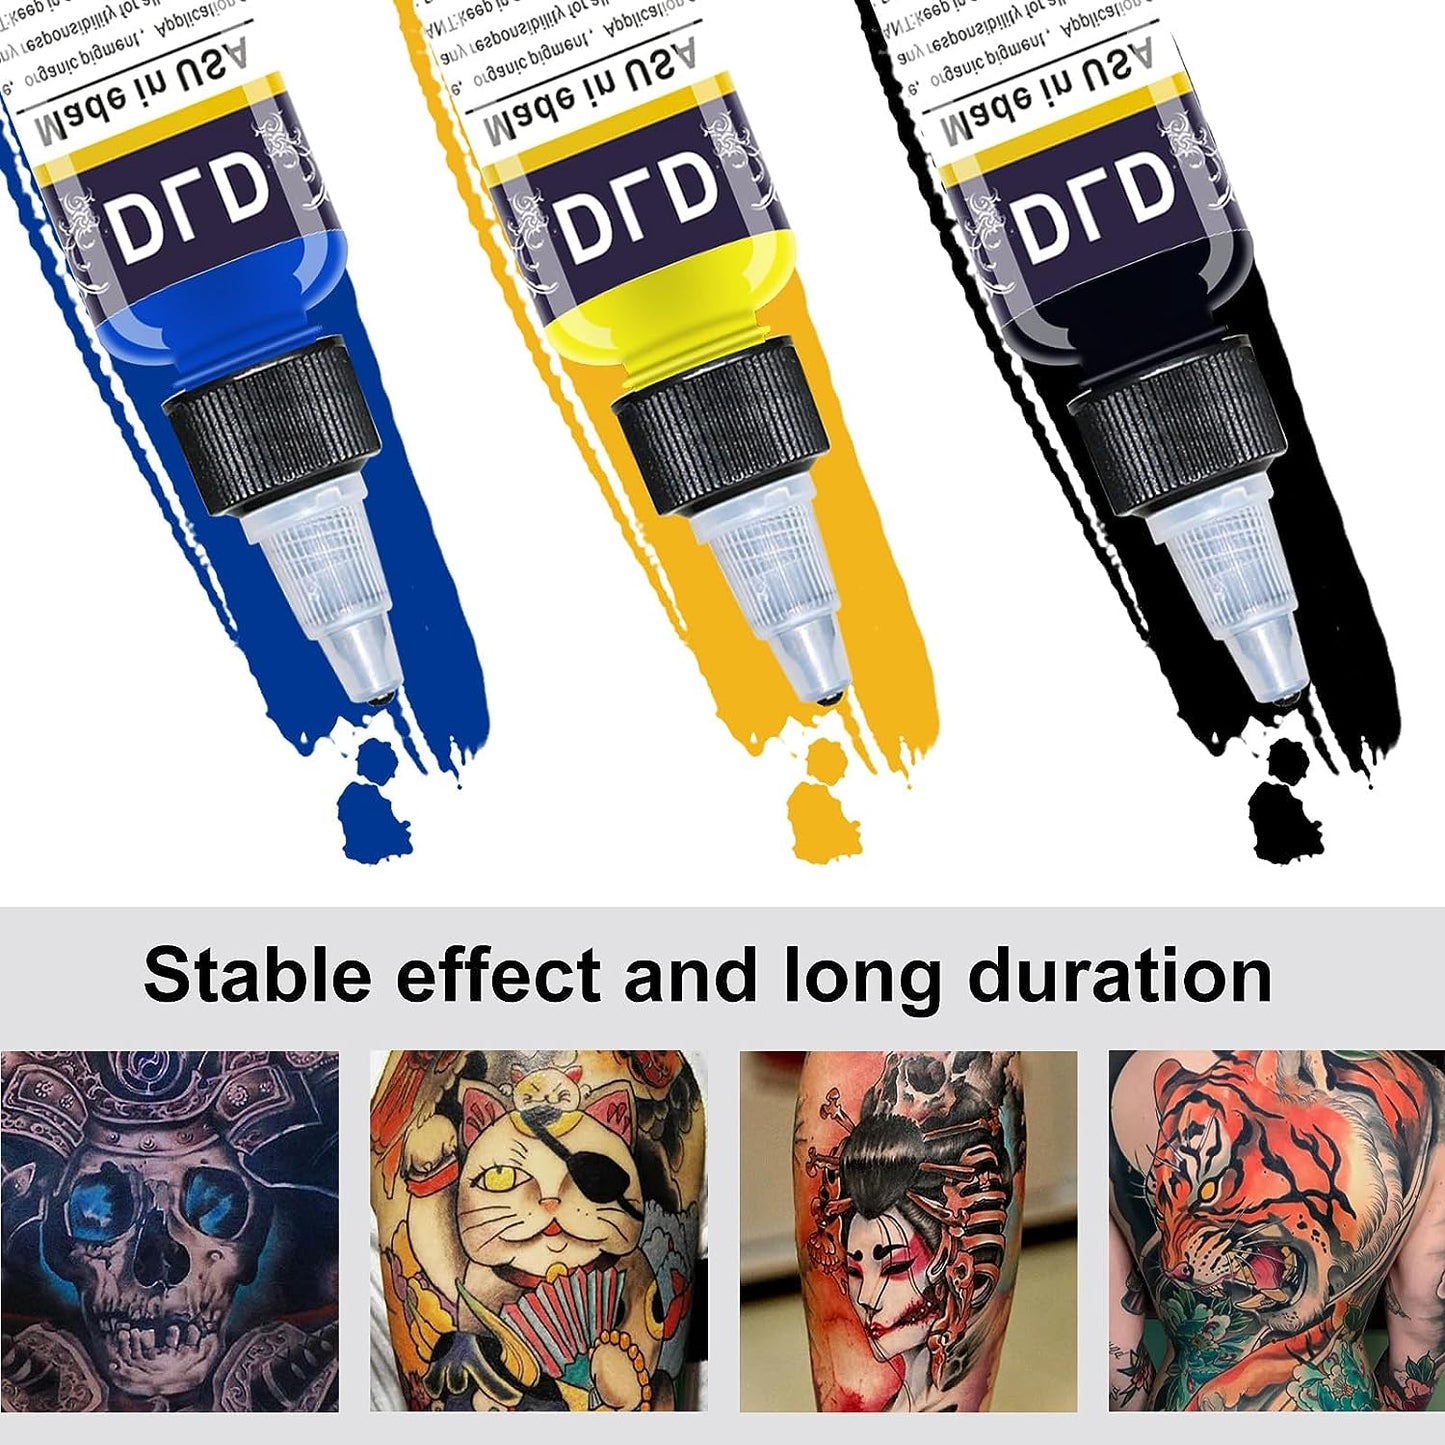 All Purpose Tattoo Ink 25 Base Colour Set Tattoo Supplies Professional Tattoo Pigment Body Color 0.5 Oz 15ml